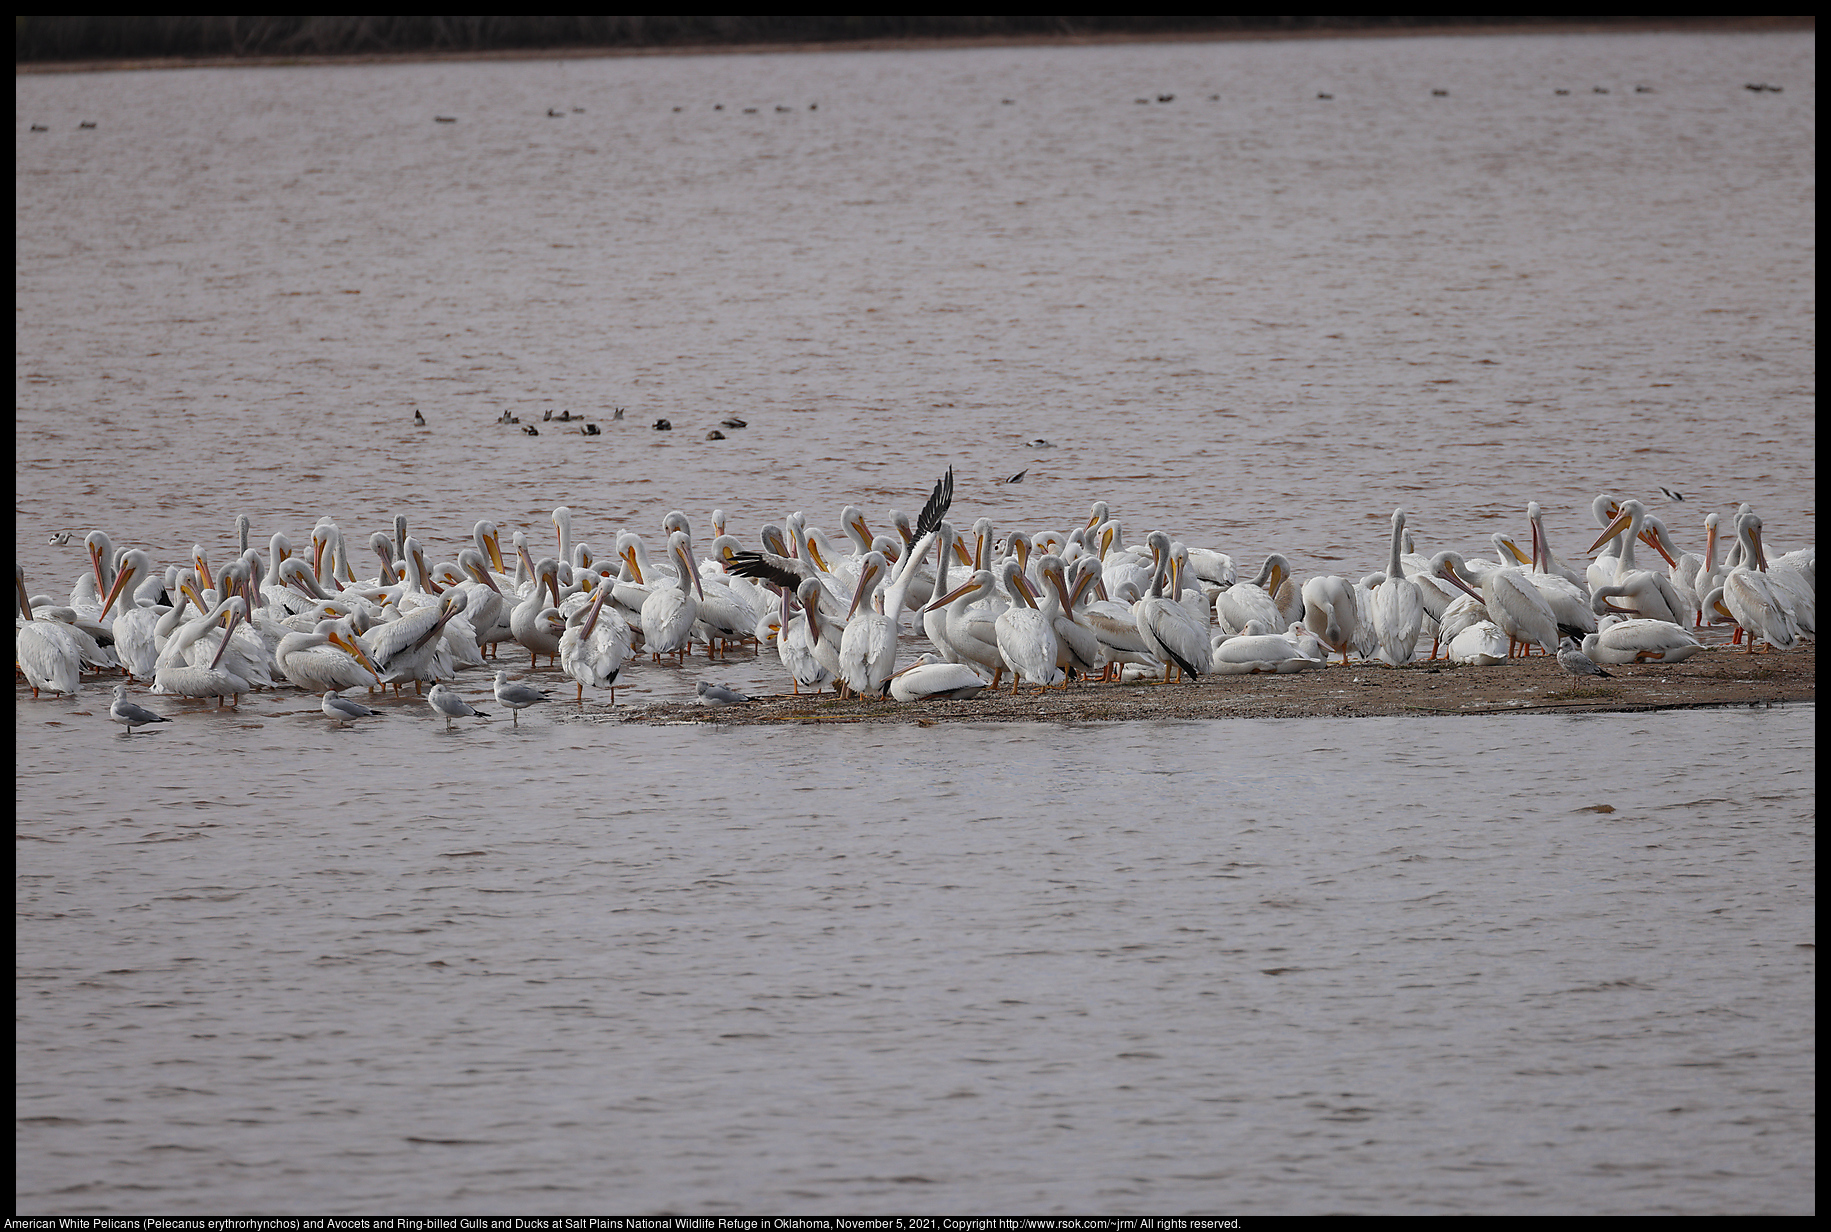 American White Pelicans (Pelecanus erythrorhynchos) and Avocets and Ring-billed Gulls and Ducks at Salt Plains National Wildlife Refuge in Oklahoma, November 5, 2021